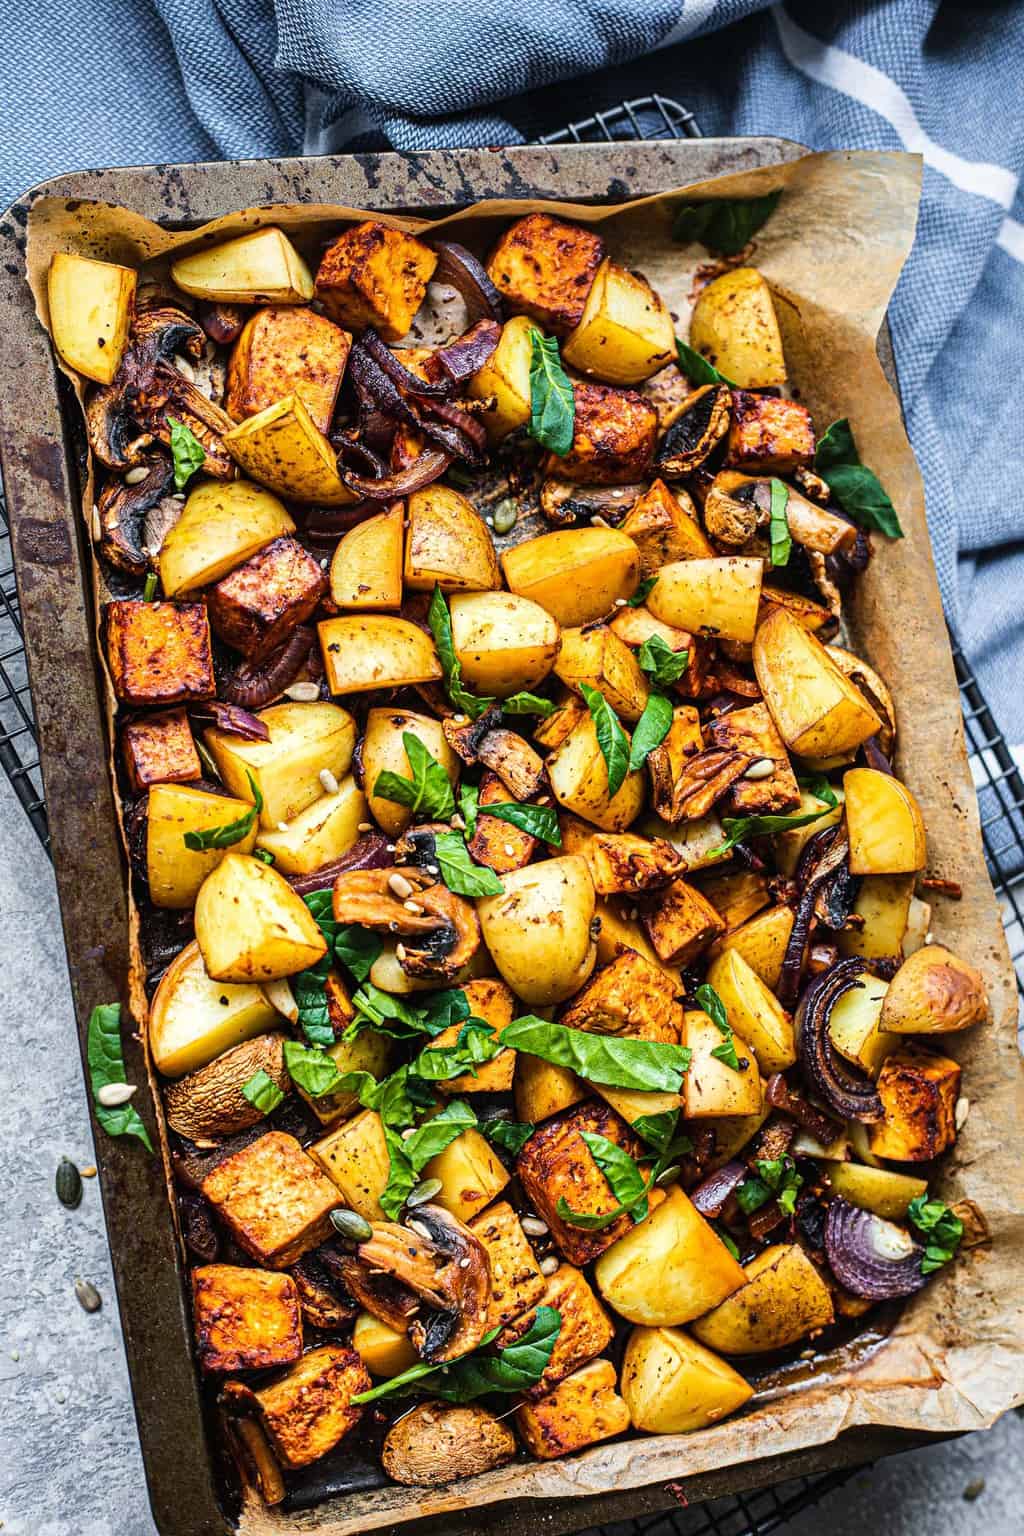 Sheet pan meal with potatoes and tofu